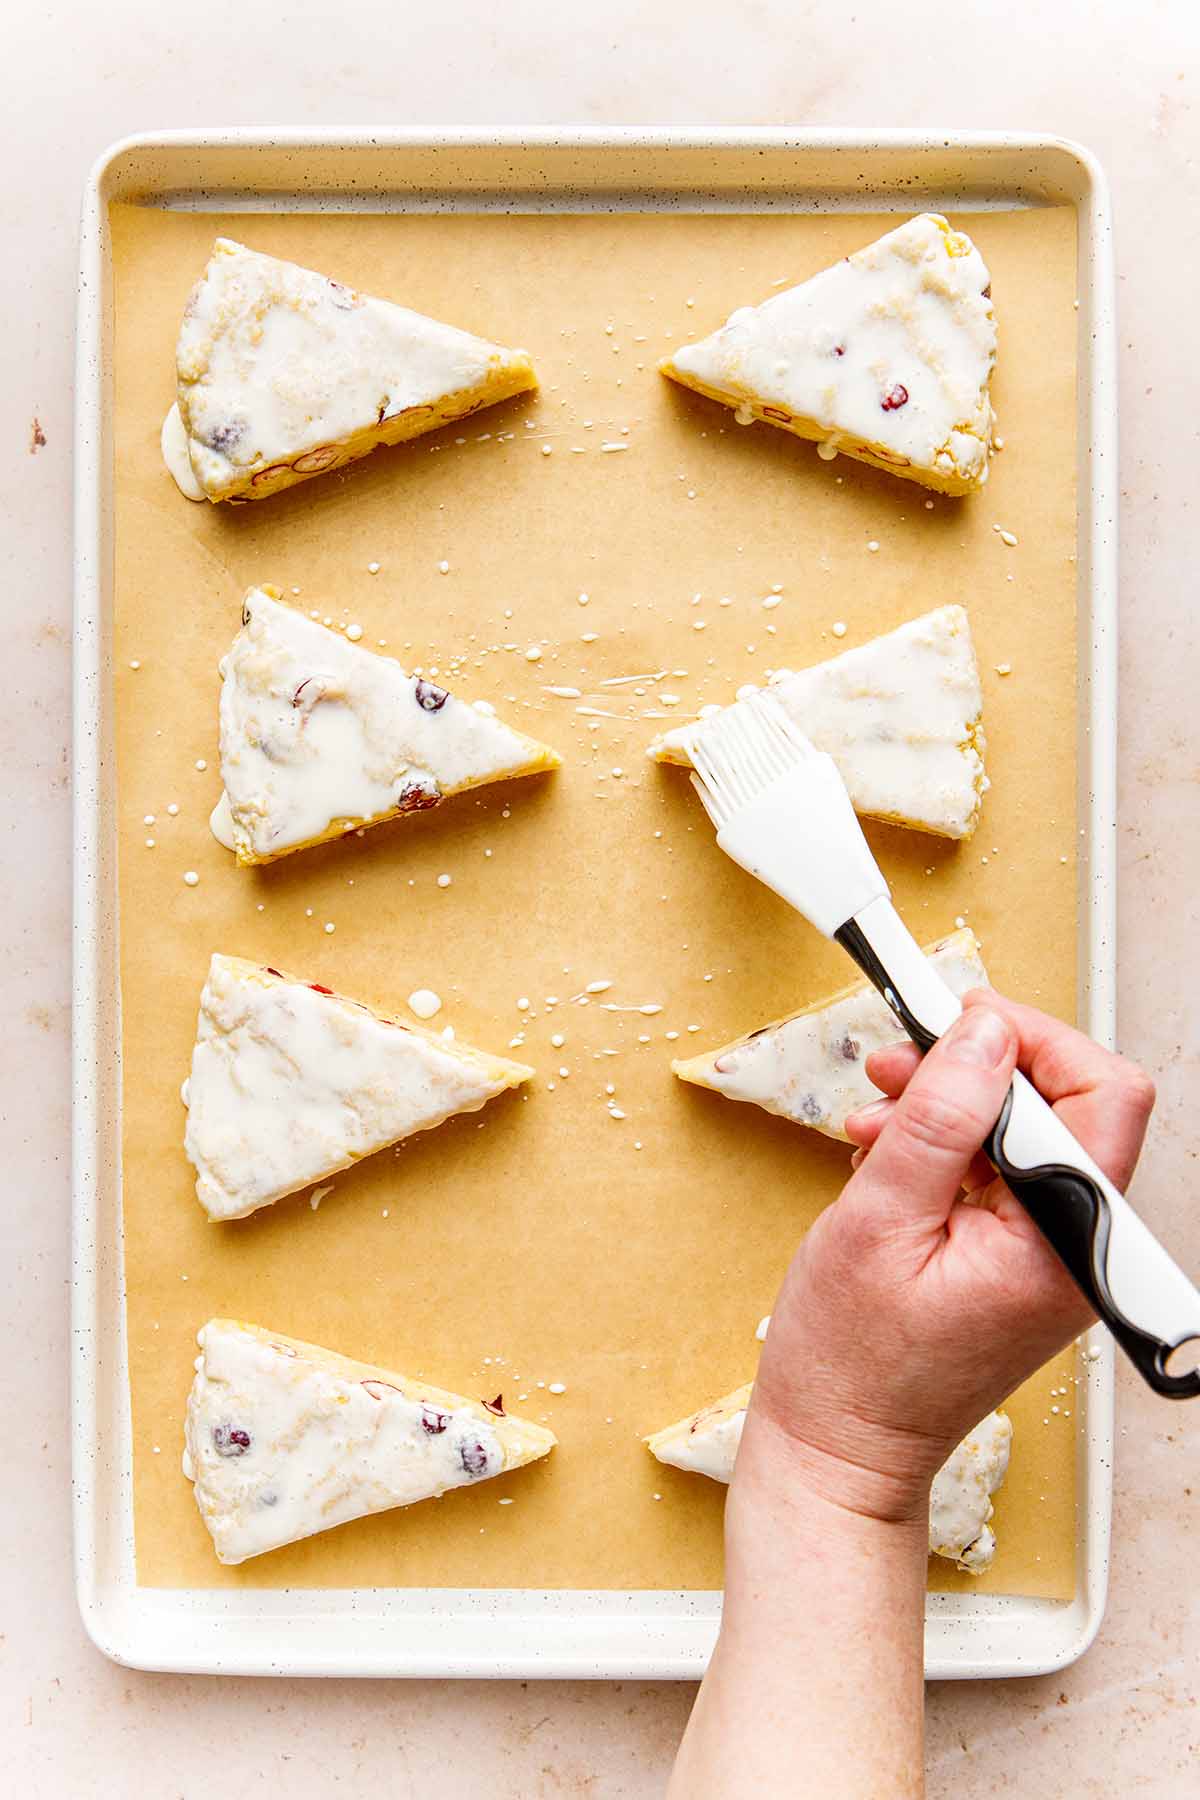 A hand brishing cream on unbaked scones.